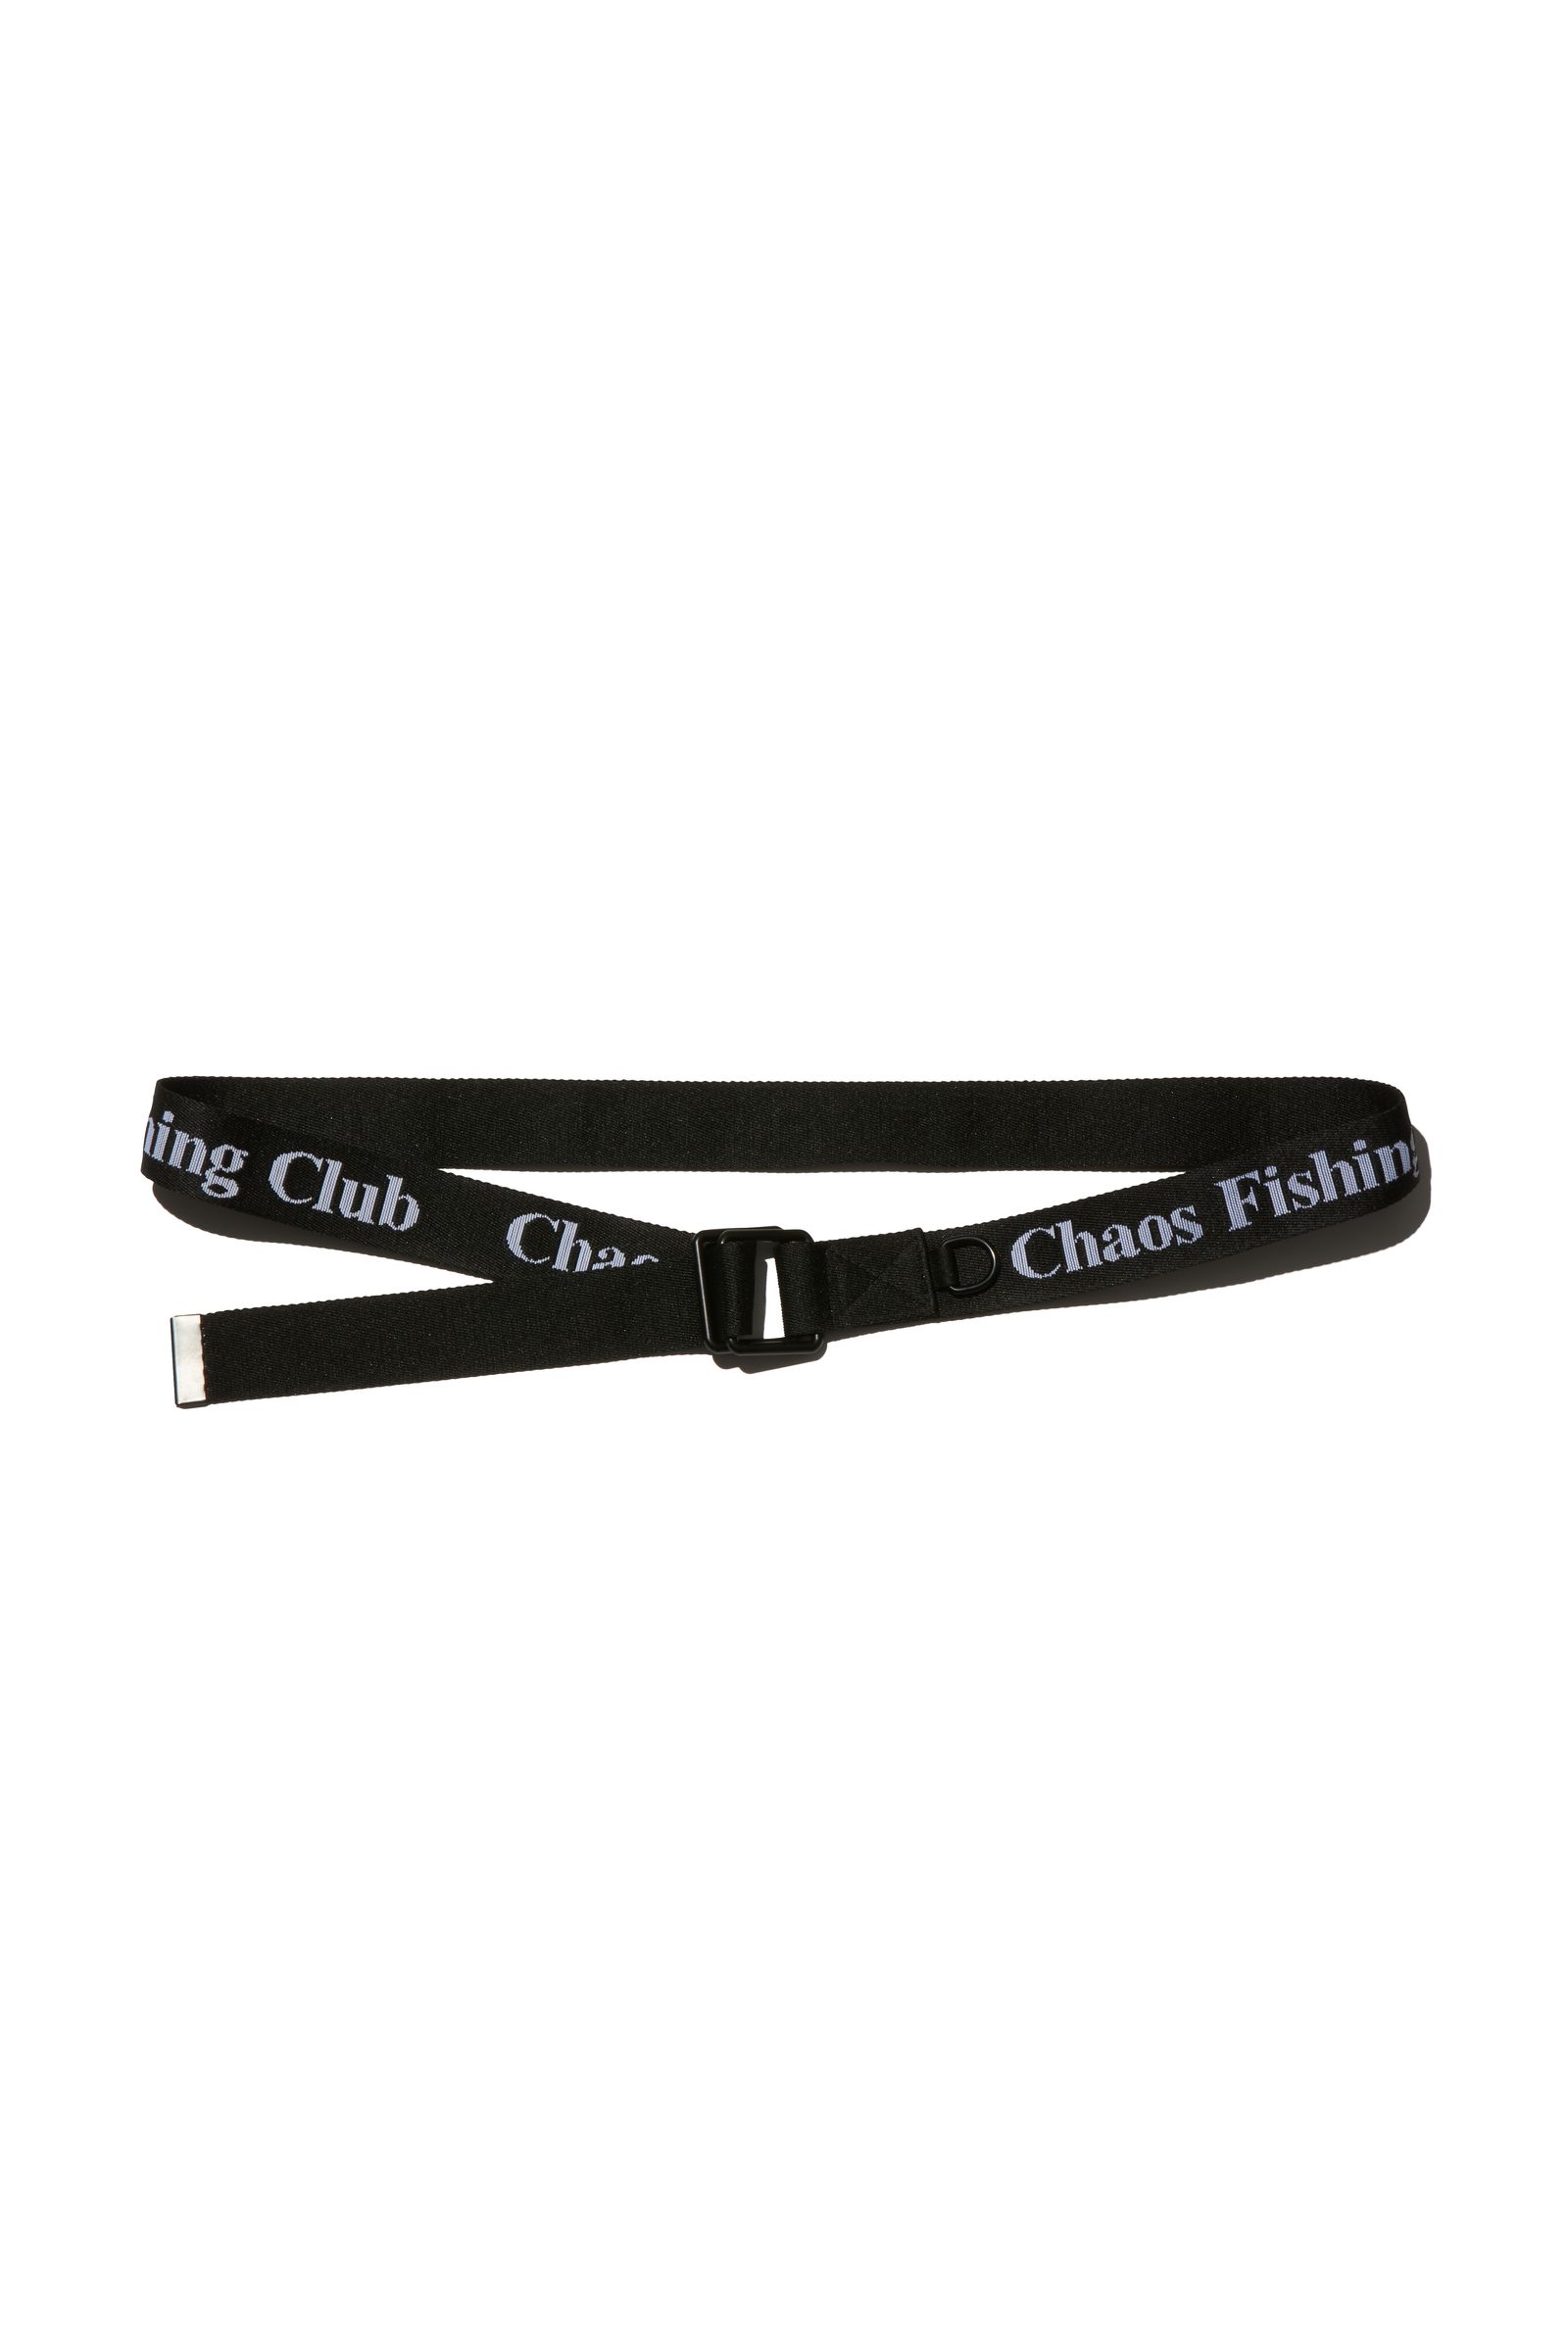 Chaos Fishing Club - LOGO BELT / BLACK | Stripe Online Store